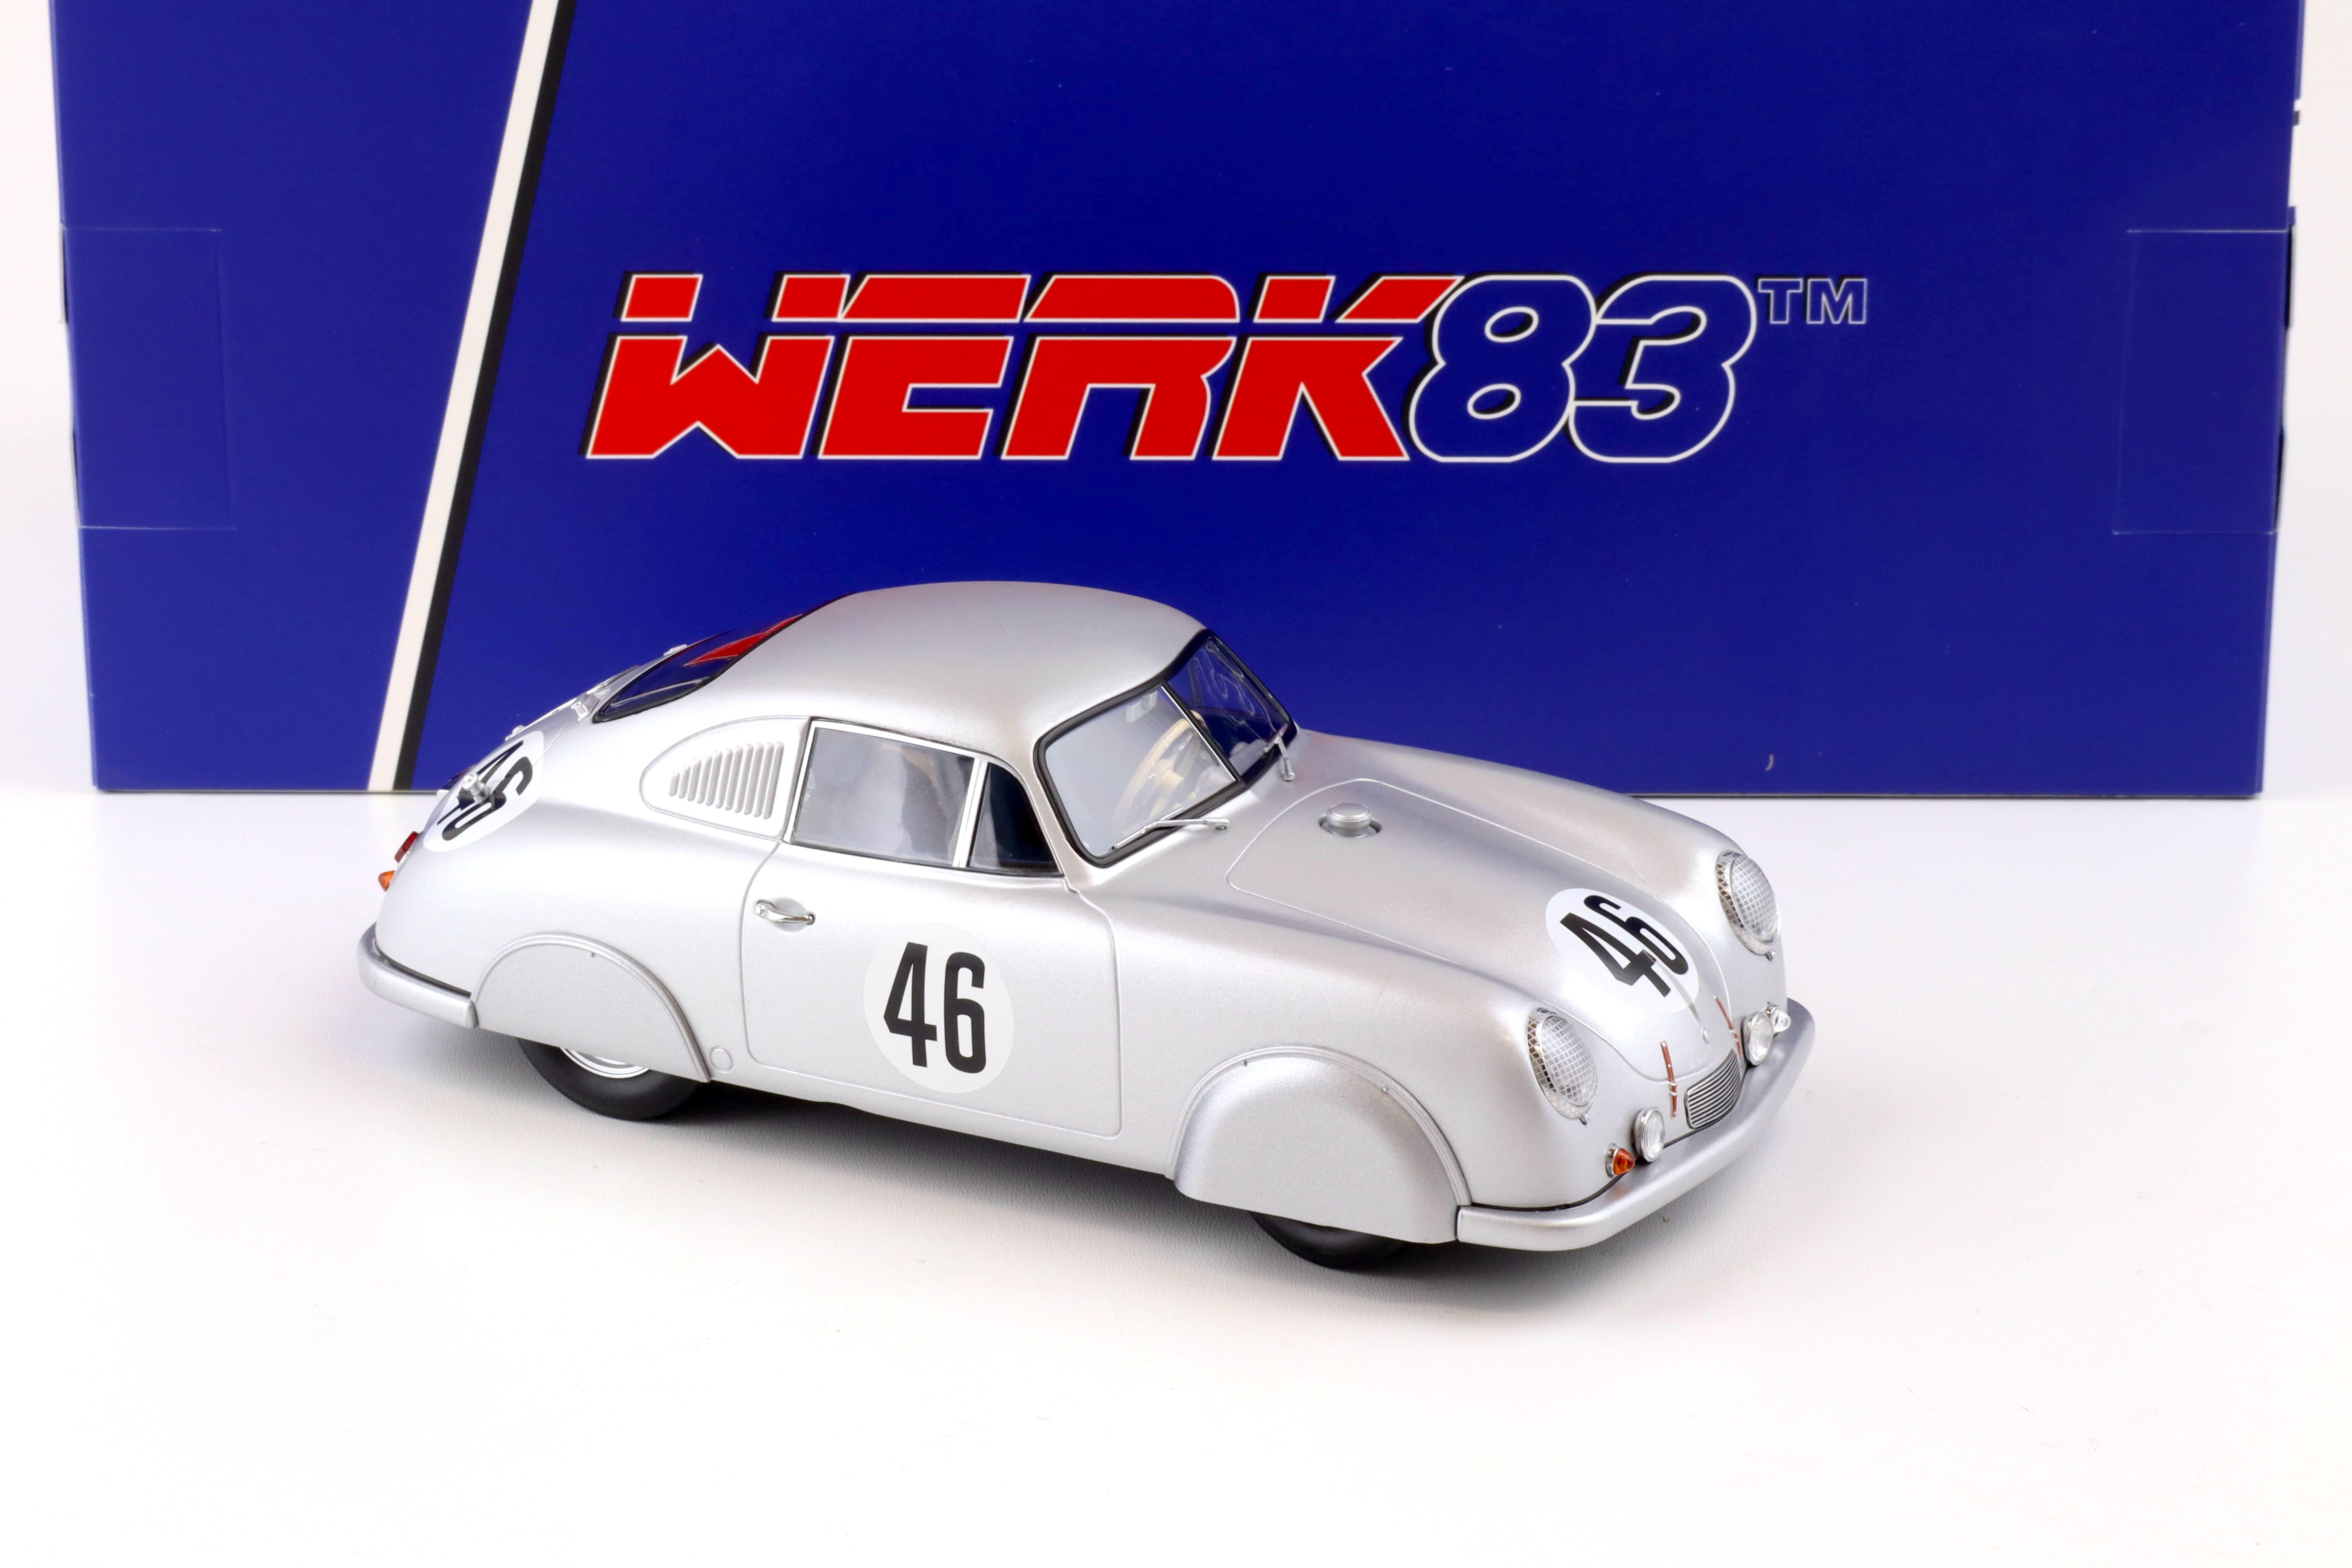 1:18 Werk83 Porsche 356 SL #46 Class Winner 24h Le Mans 1951 Veuillet/ Mouche